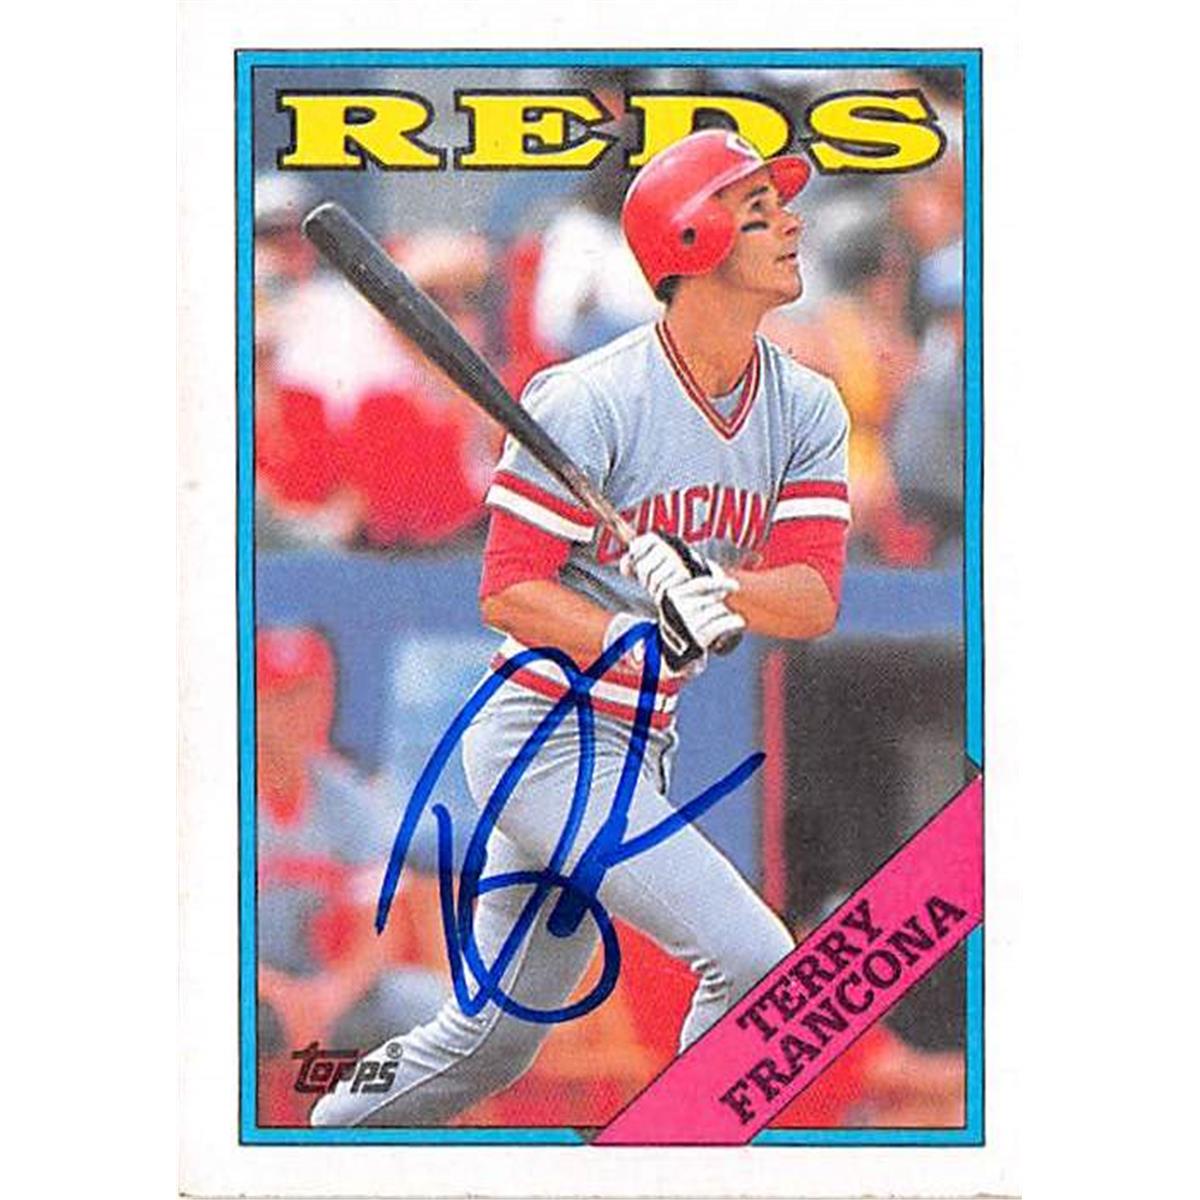 Autograph Warehouse 366426 Terry Francona Autographed Baseball Card - 1988 Topps-686